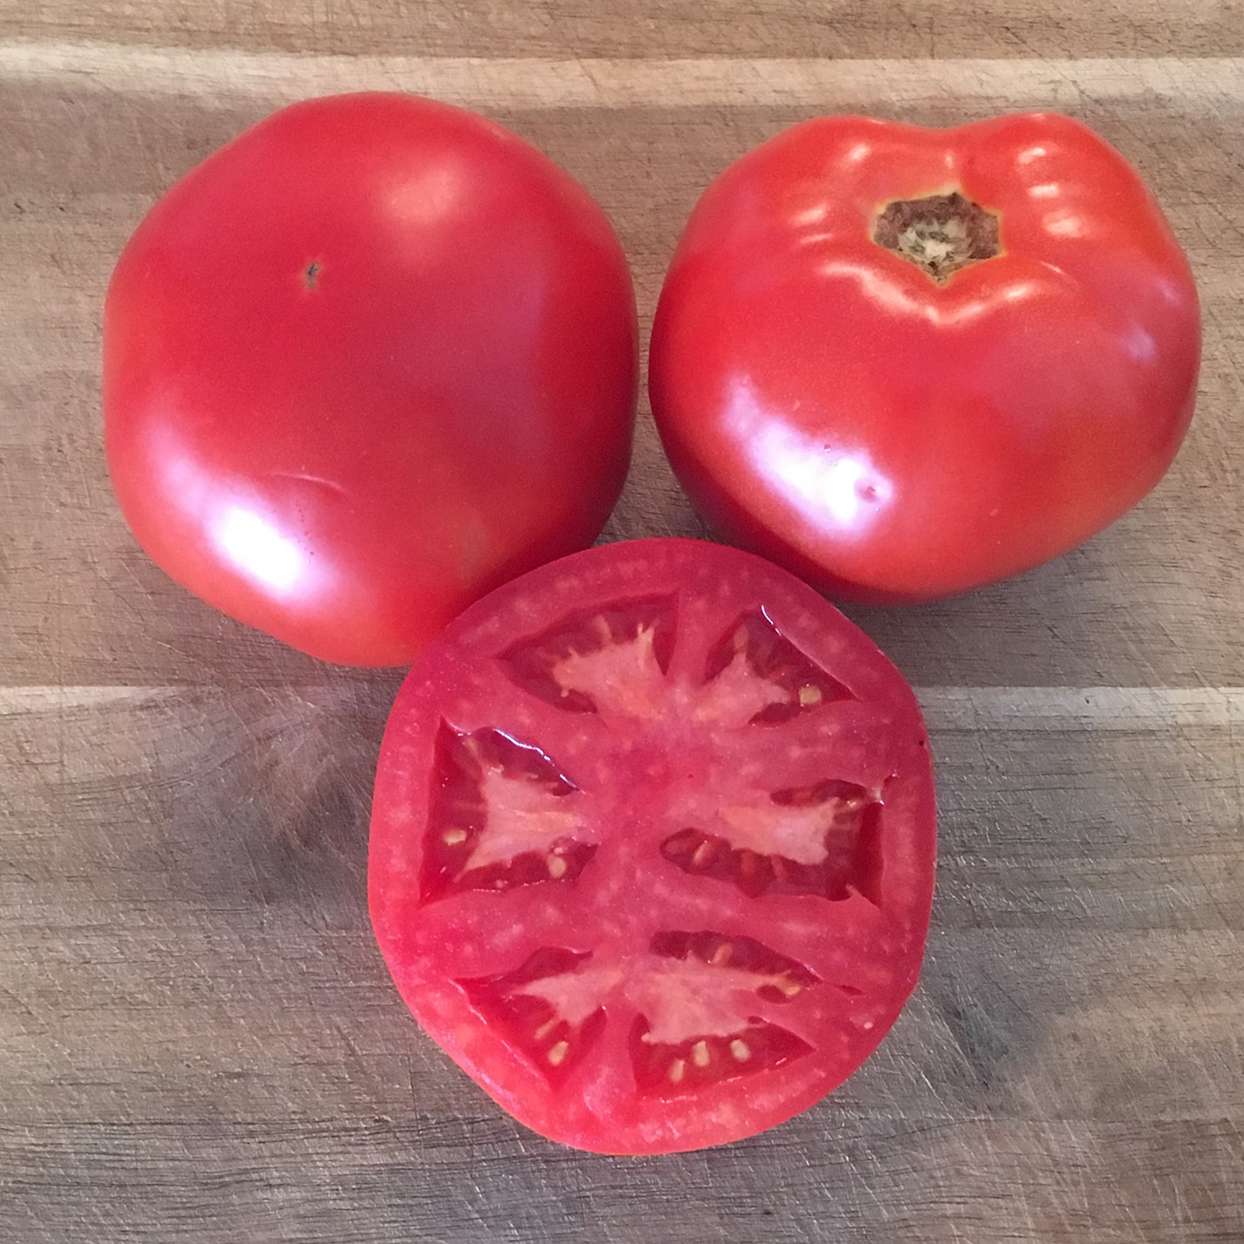 three galahad tomatoes on table, one cut in half